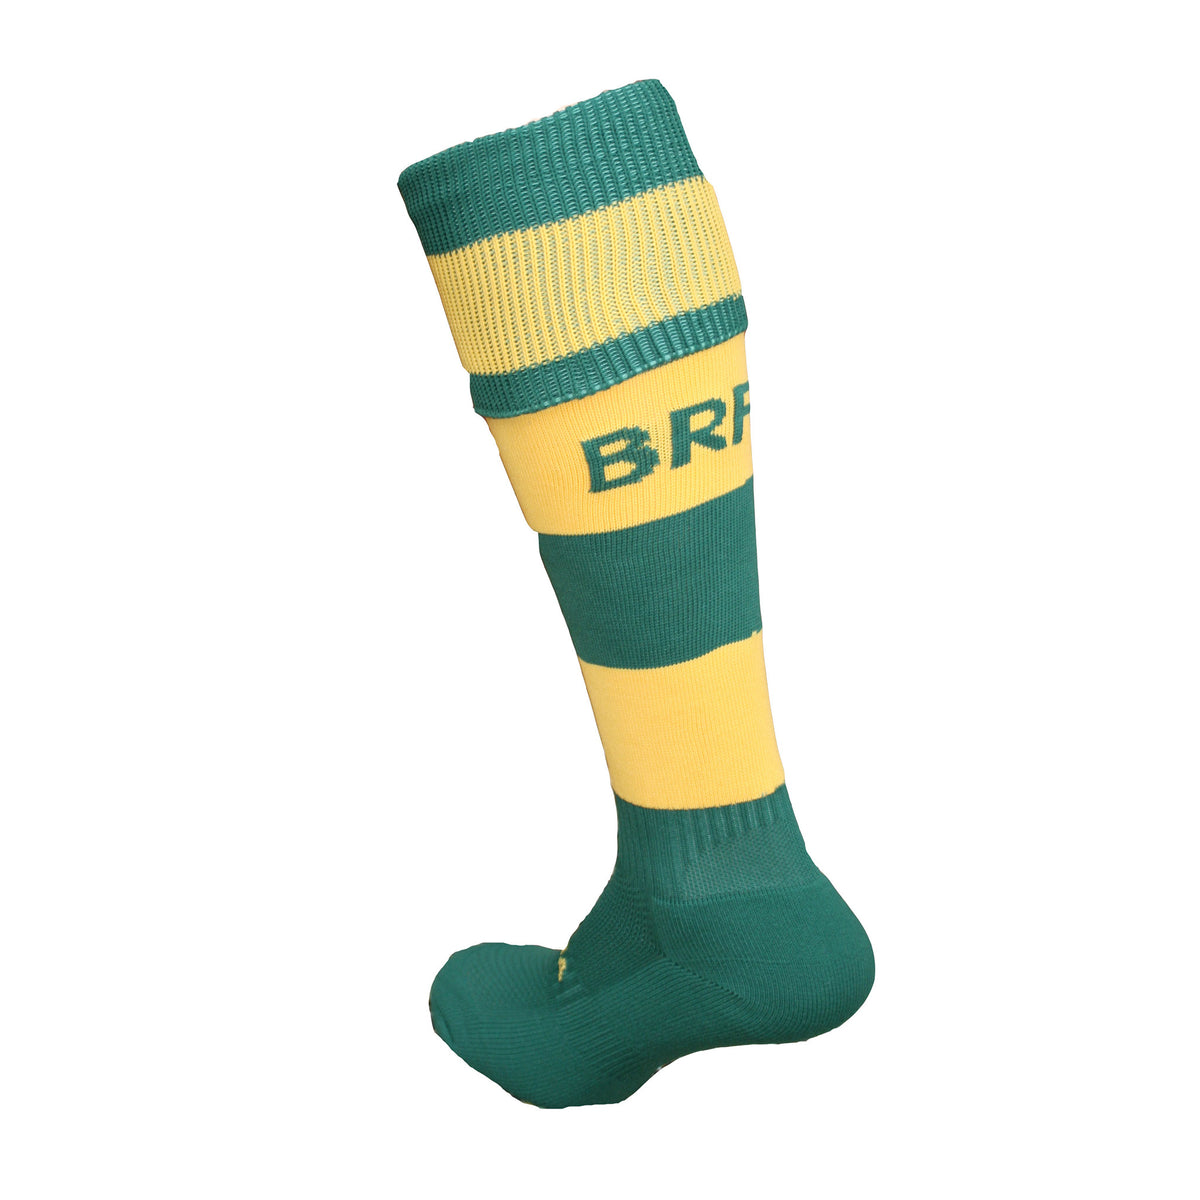 Beaconsfield RFC Sock